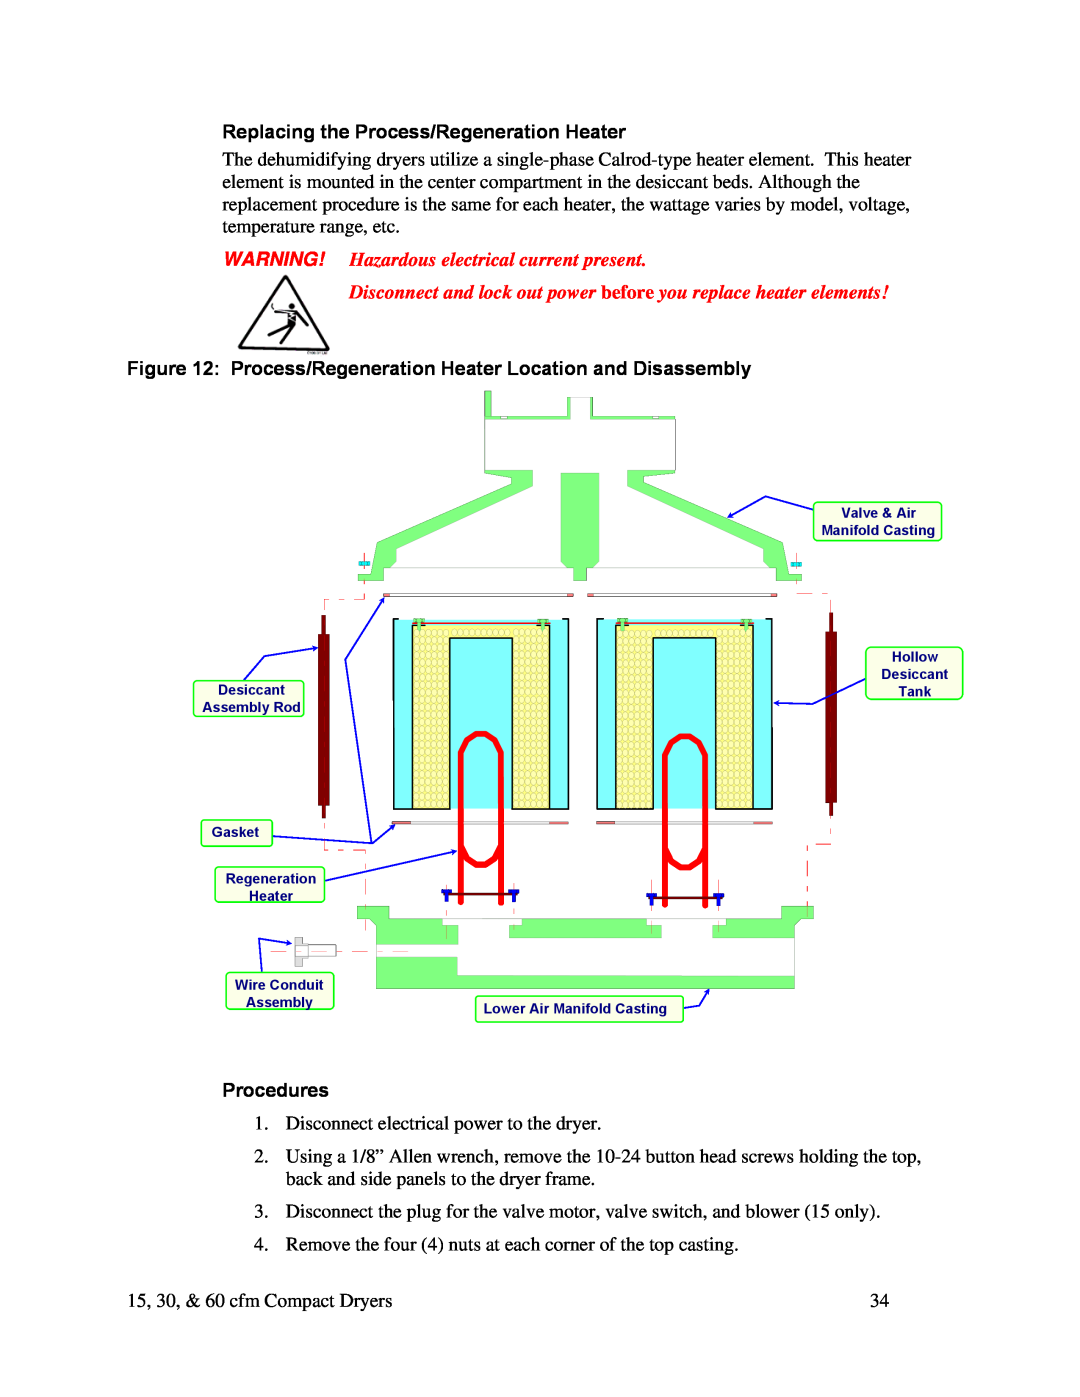 Sterling 60 cfm Replacing the Process/Regeneration Heater, WARNING! Hazardous electrical current present, Procedures 